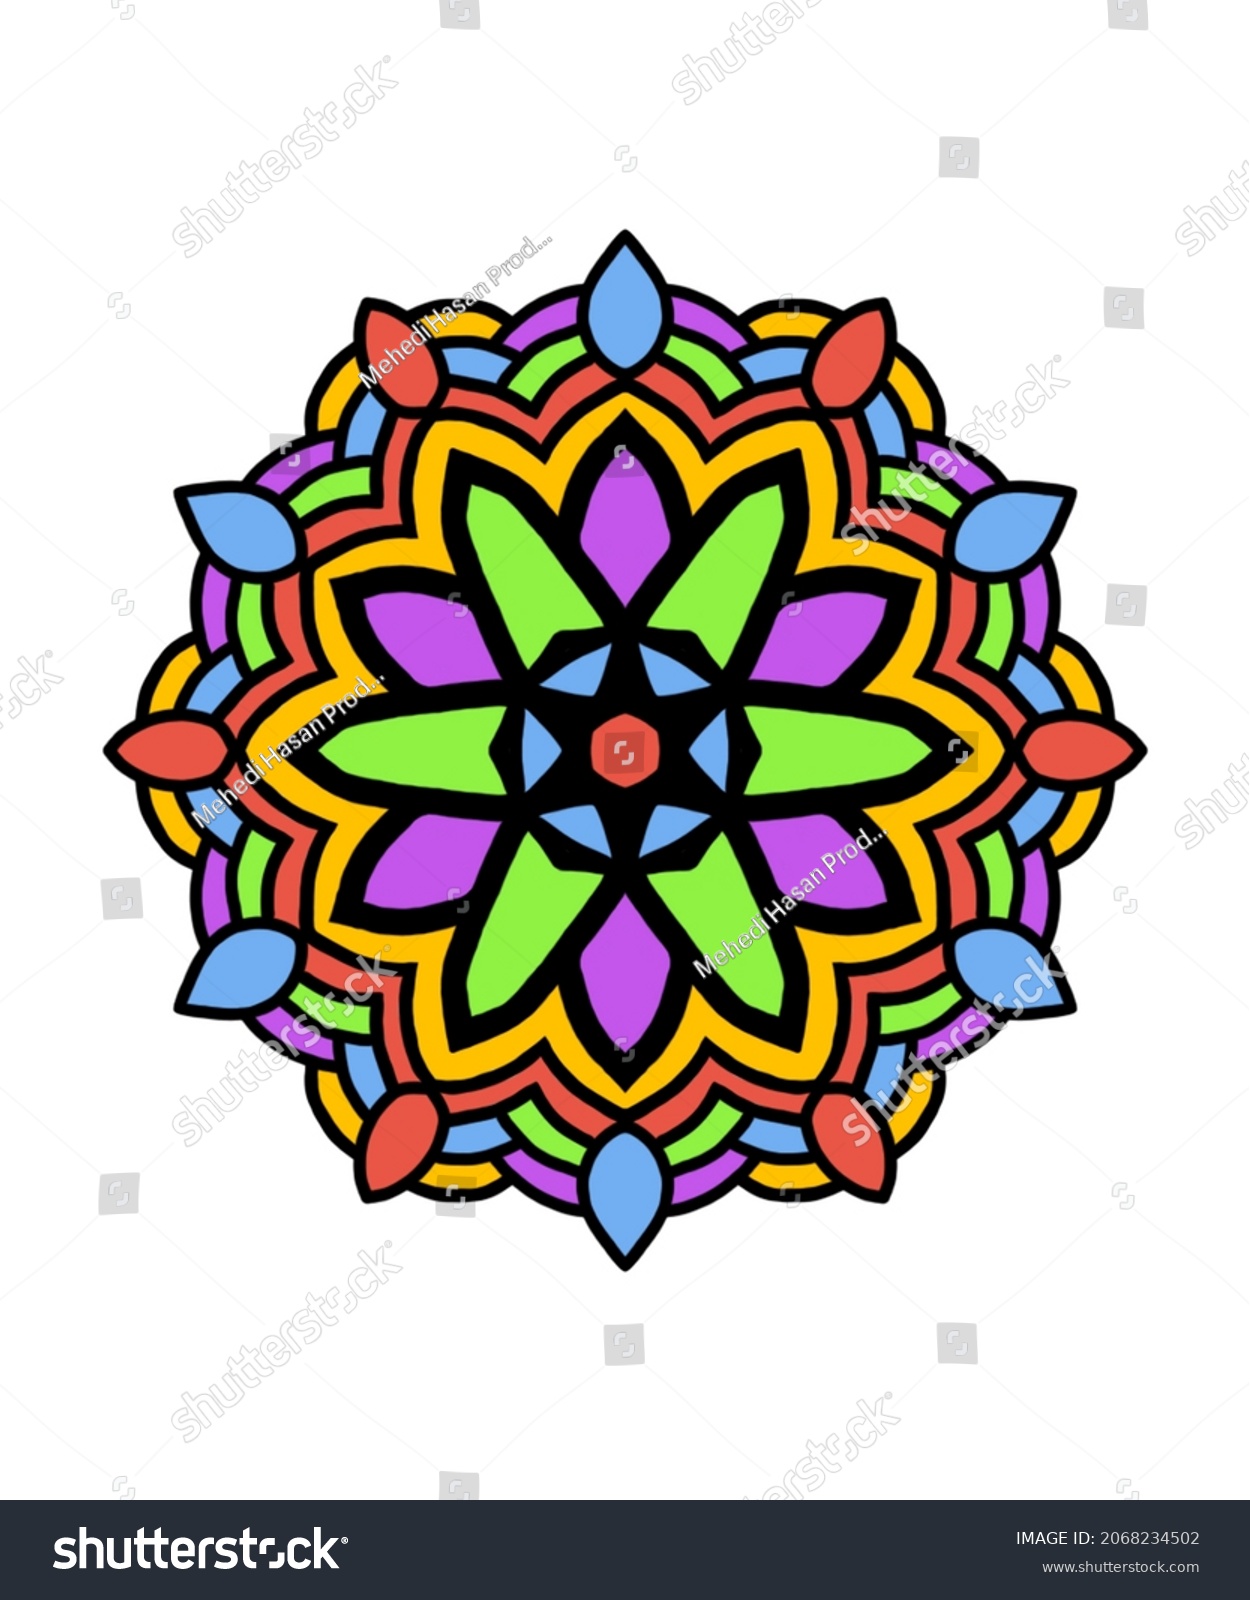 Easy Mandala Flower Coloring Page Kids Stock Illustration 2068234502 ...